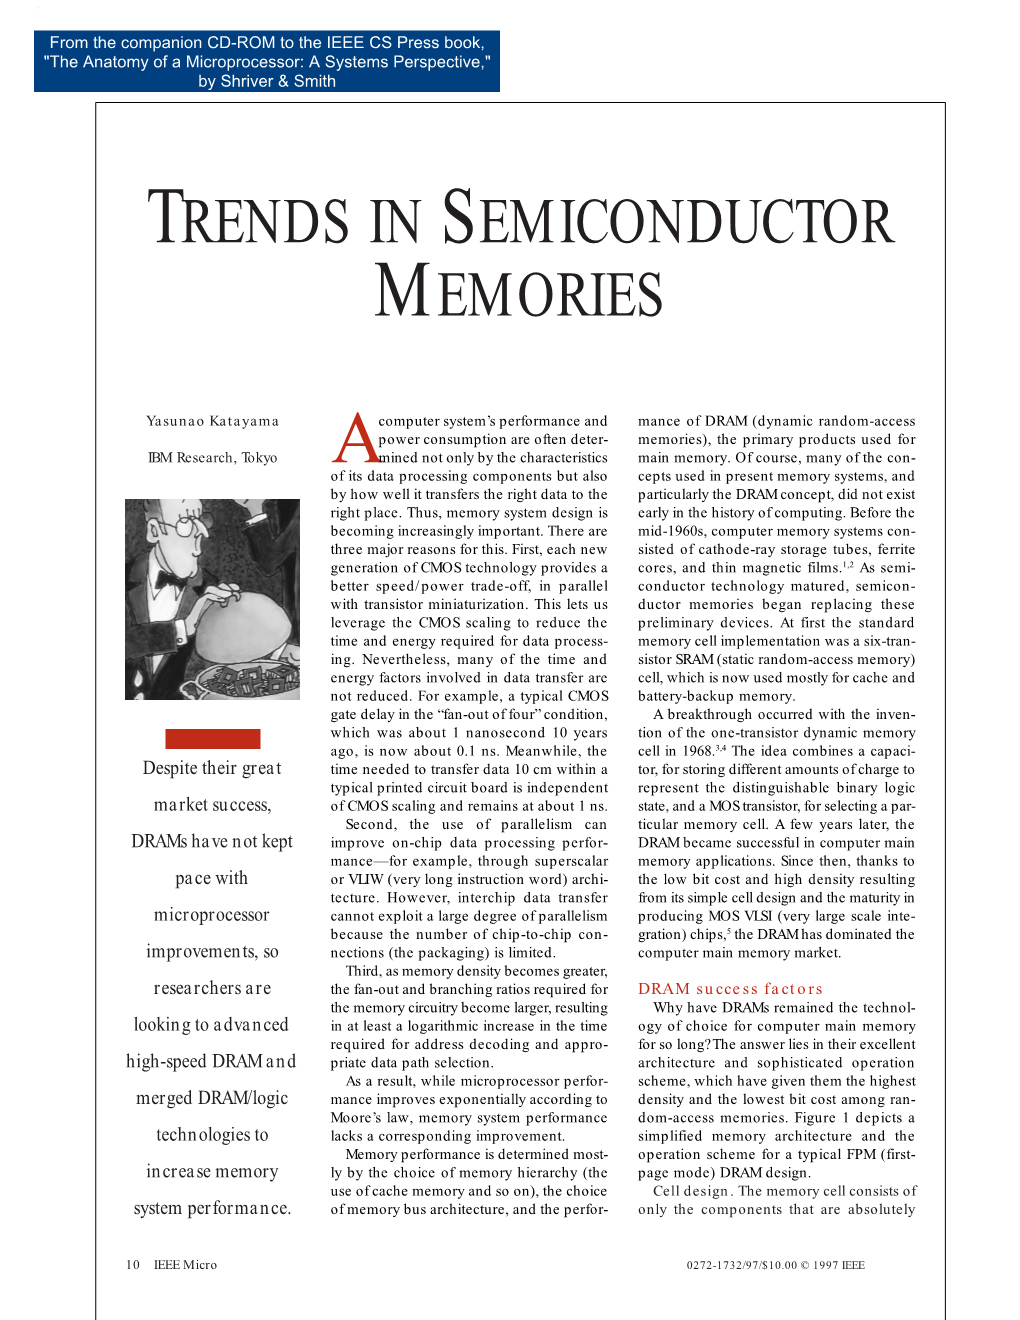 Trends in Semiconductor Memories